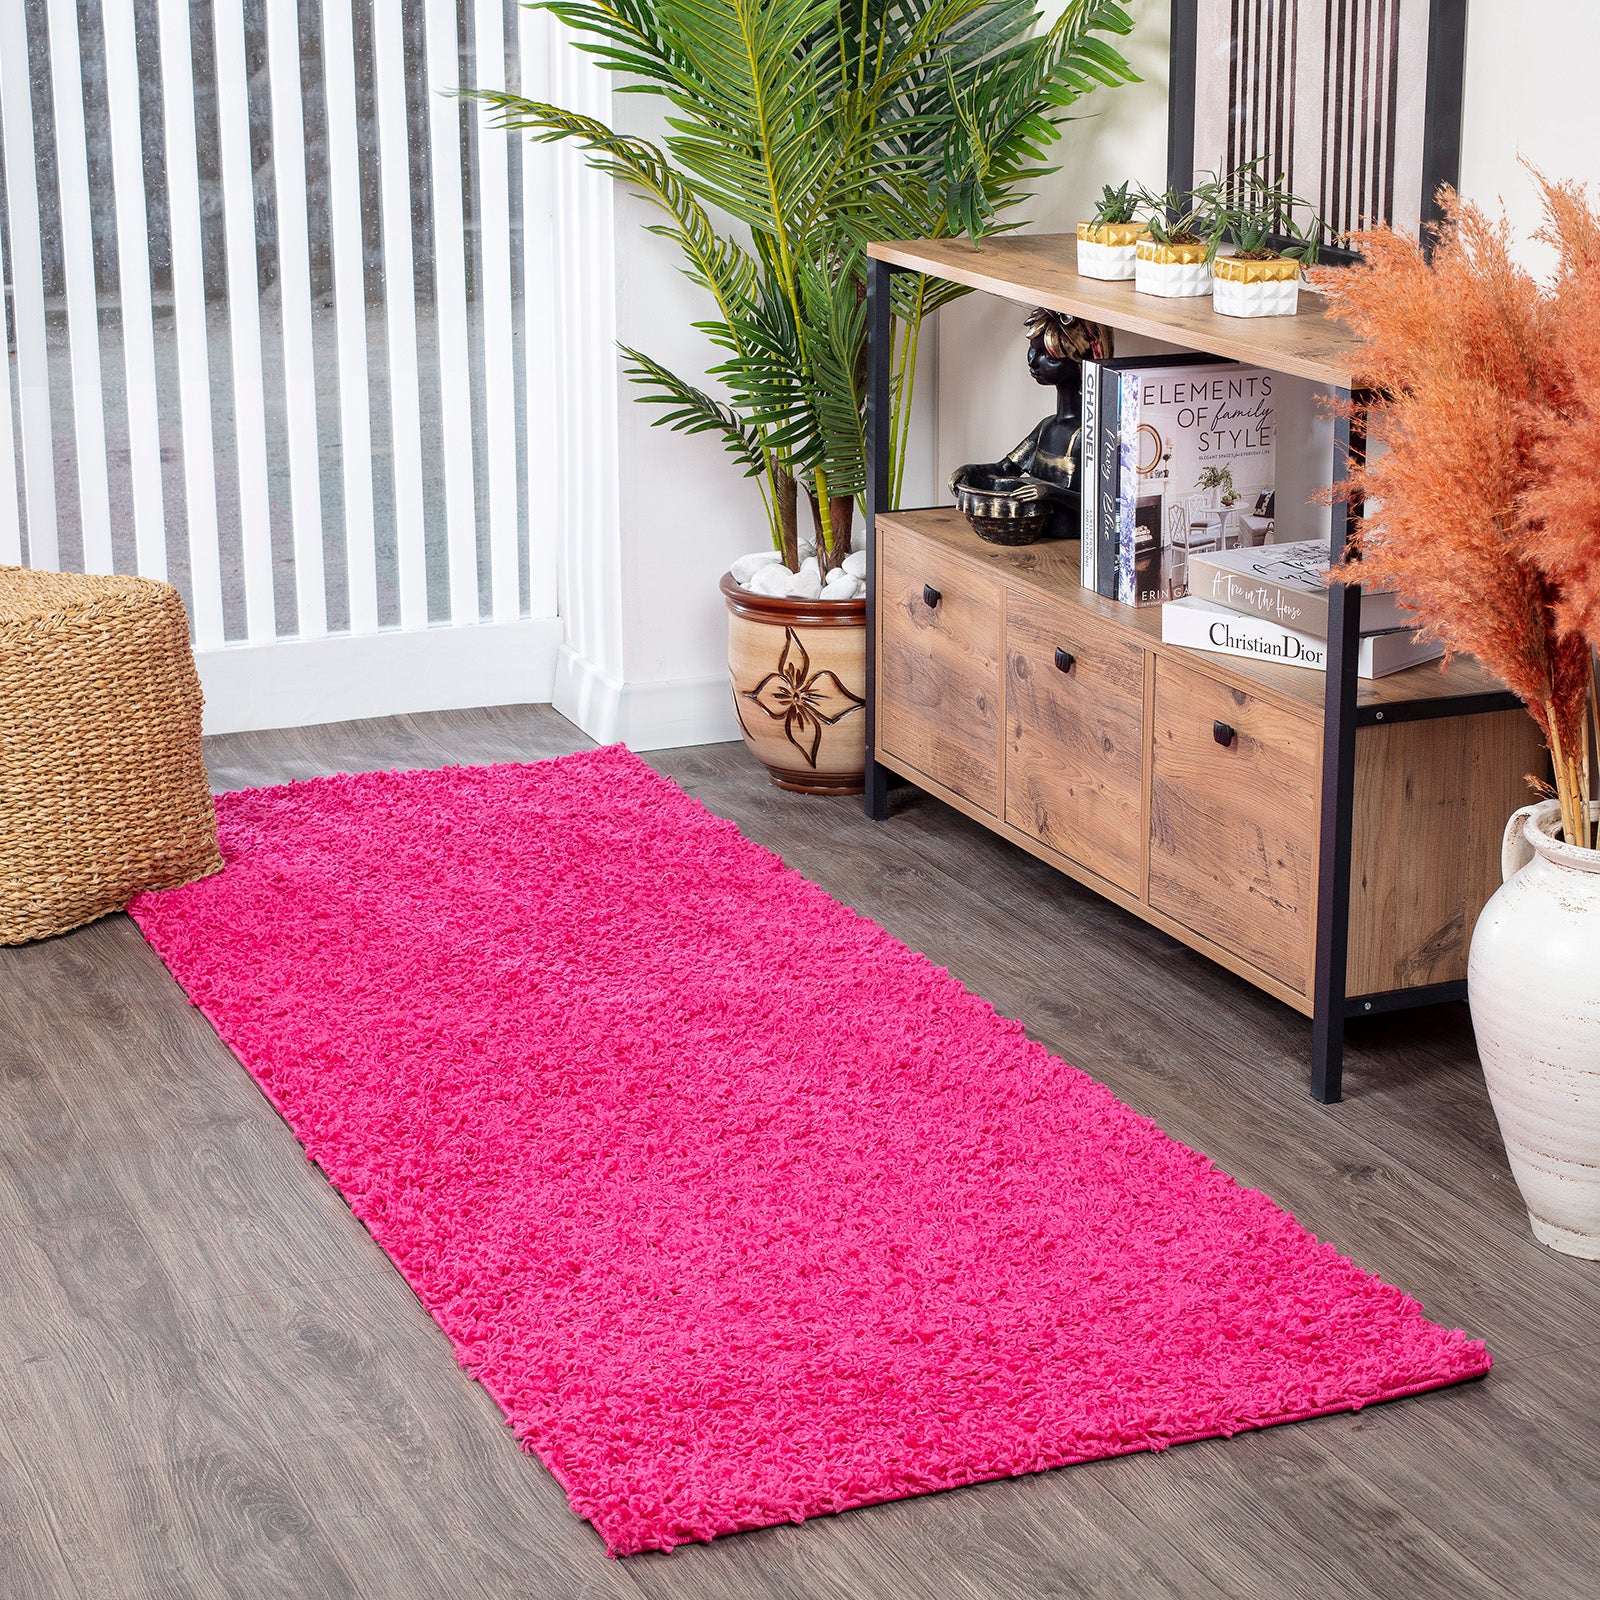 Alfombra de pasillo de semillas de sandía, alfombra larga pintada con  frutas, alfombra larga, pasillo, entrada, sala de estar, alfombra moderna  (2 x 6